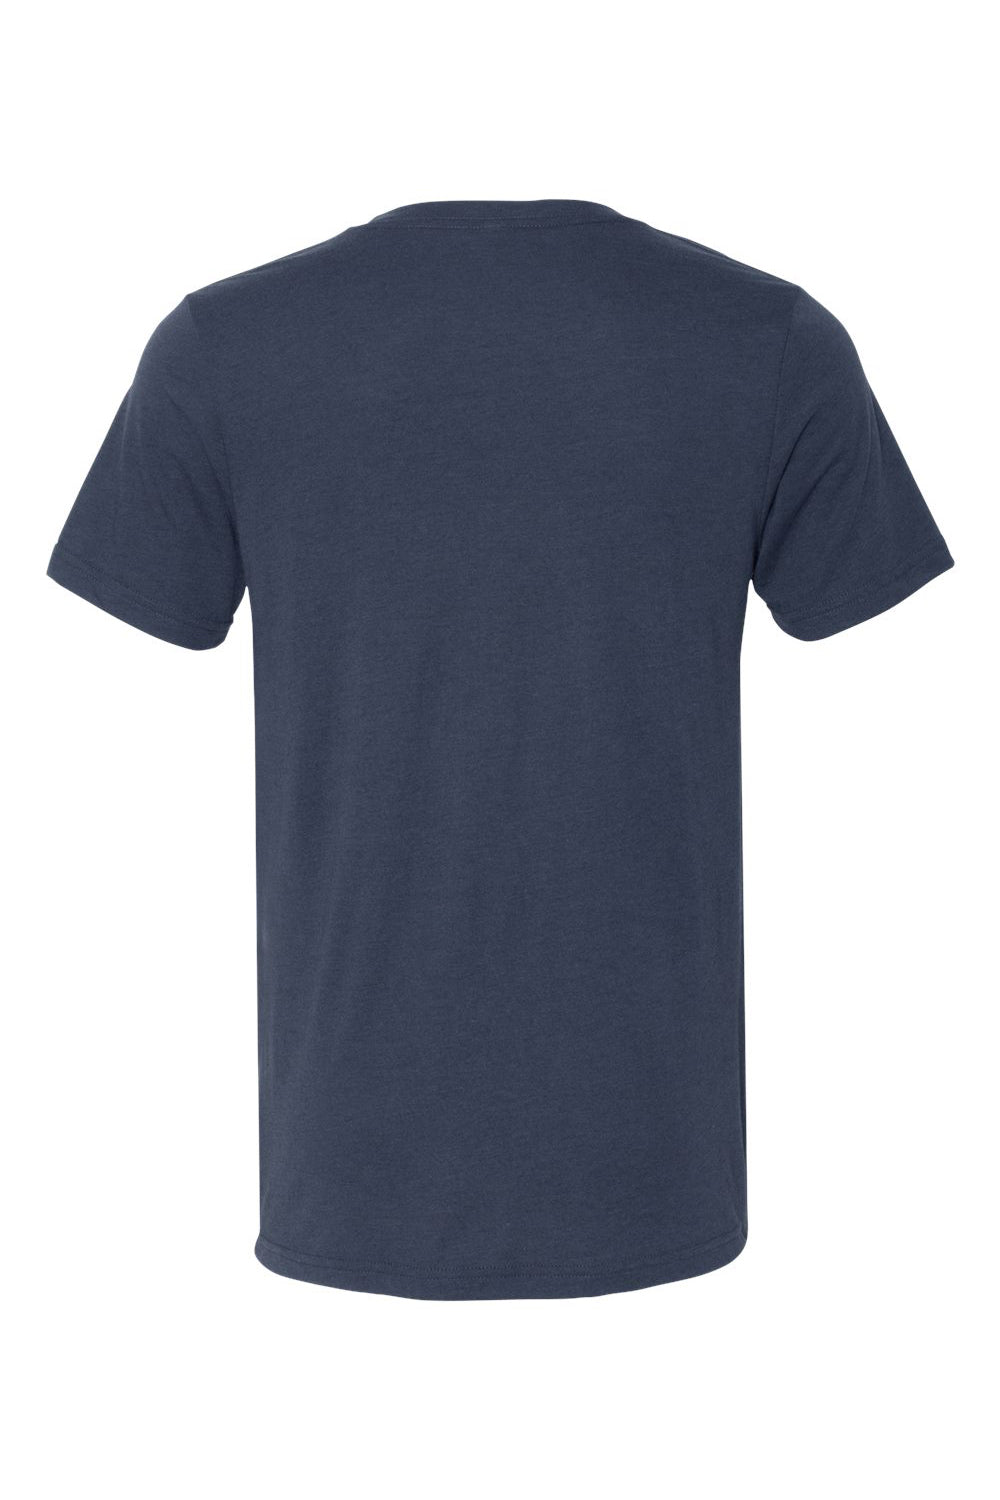 Bella + Canvas BC3415/3415C/3415 Mens Short Sleeve V-Neck T-Shirt Solid Navy Blue Flat Back